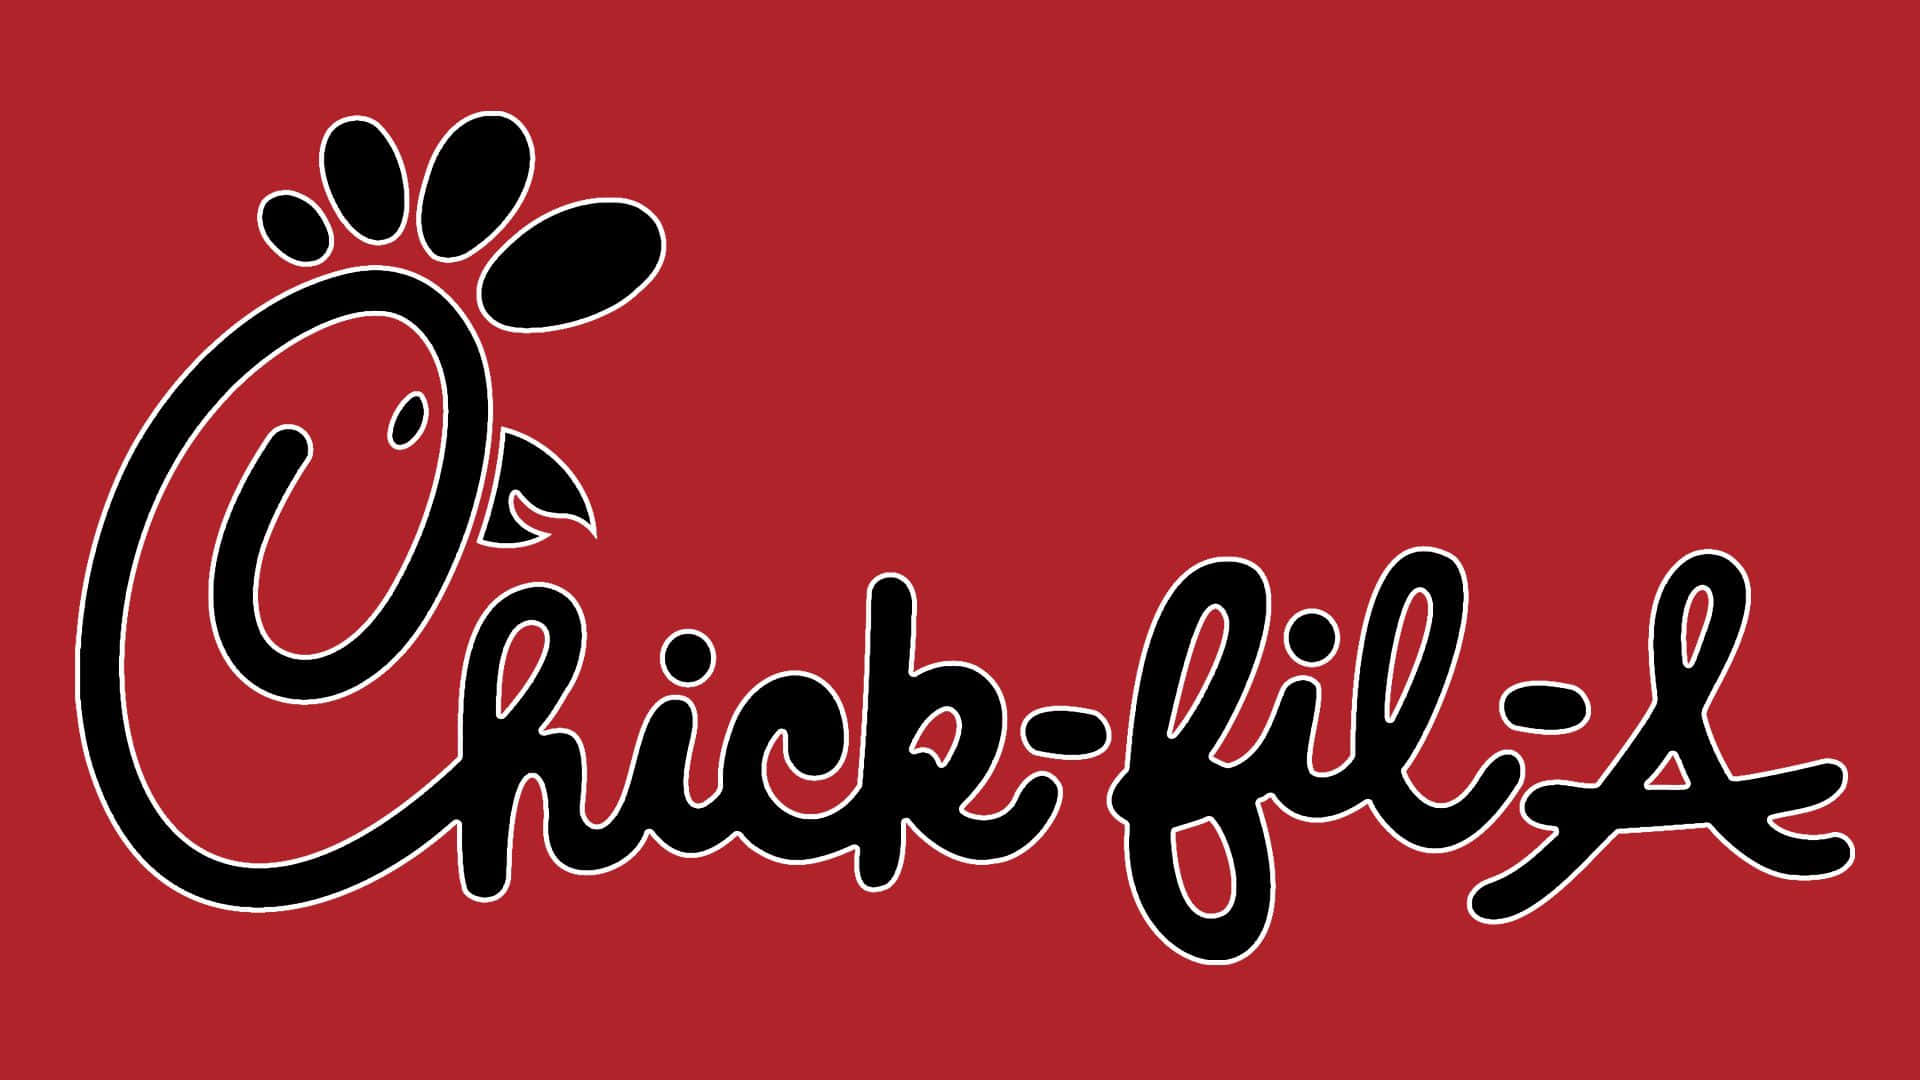 Chickfil-a-logo På En Rød Baggrund.